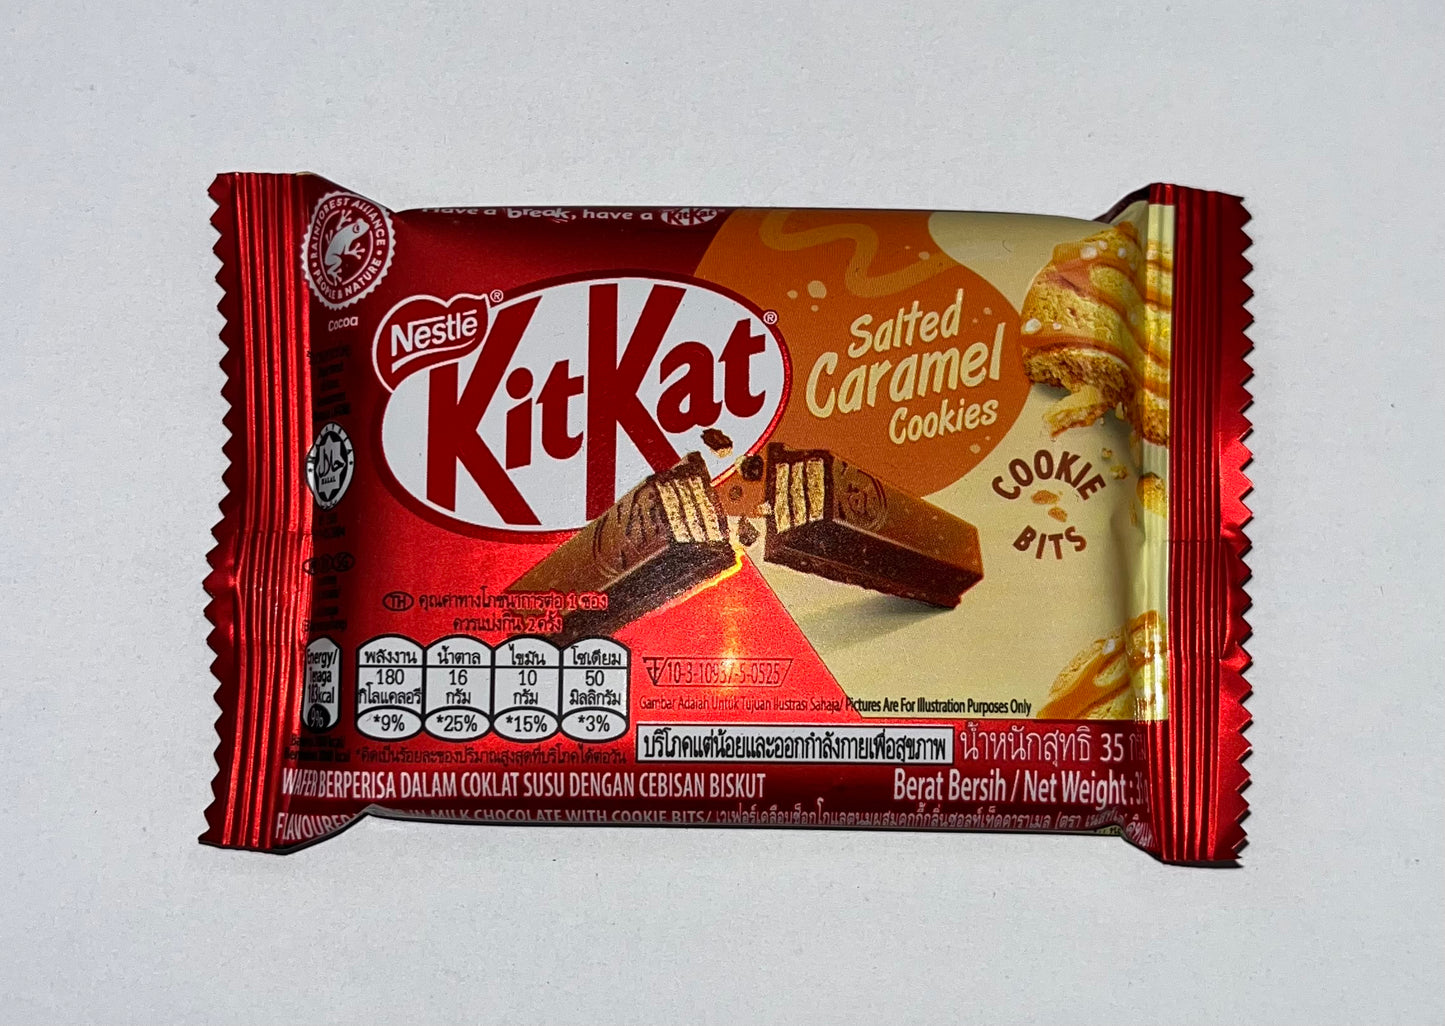 Kit Kat Salted Caramel Cookies Chocolate Bar 35G - Extreme Snacks